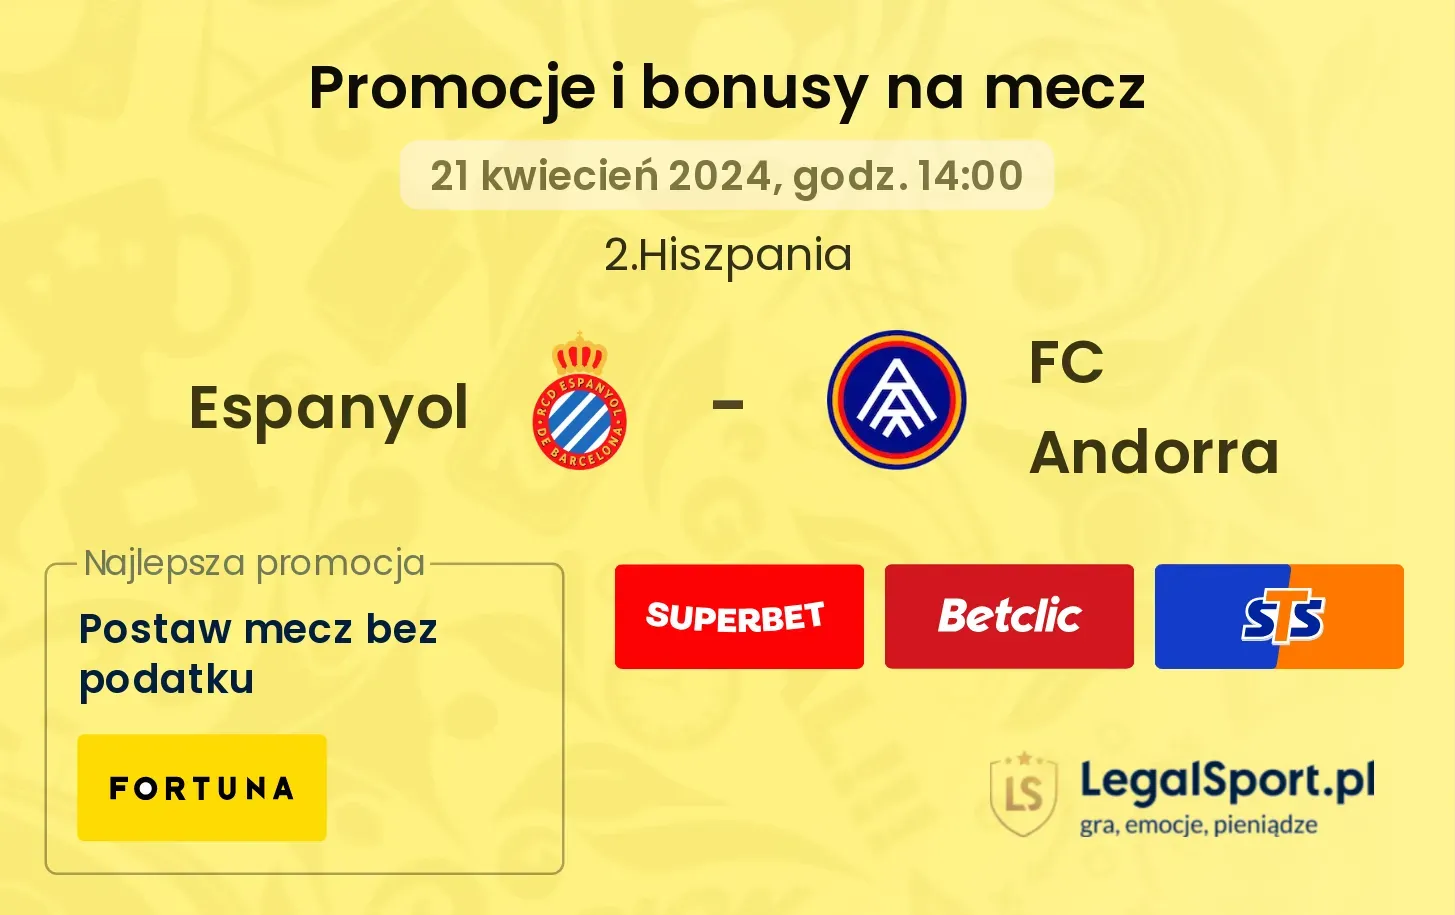 Espanyol - FC Andorra promocje bonusy na mecz